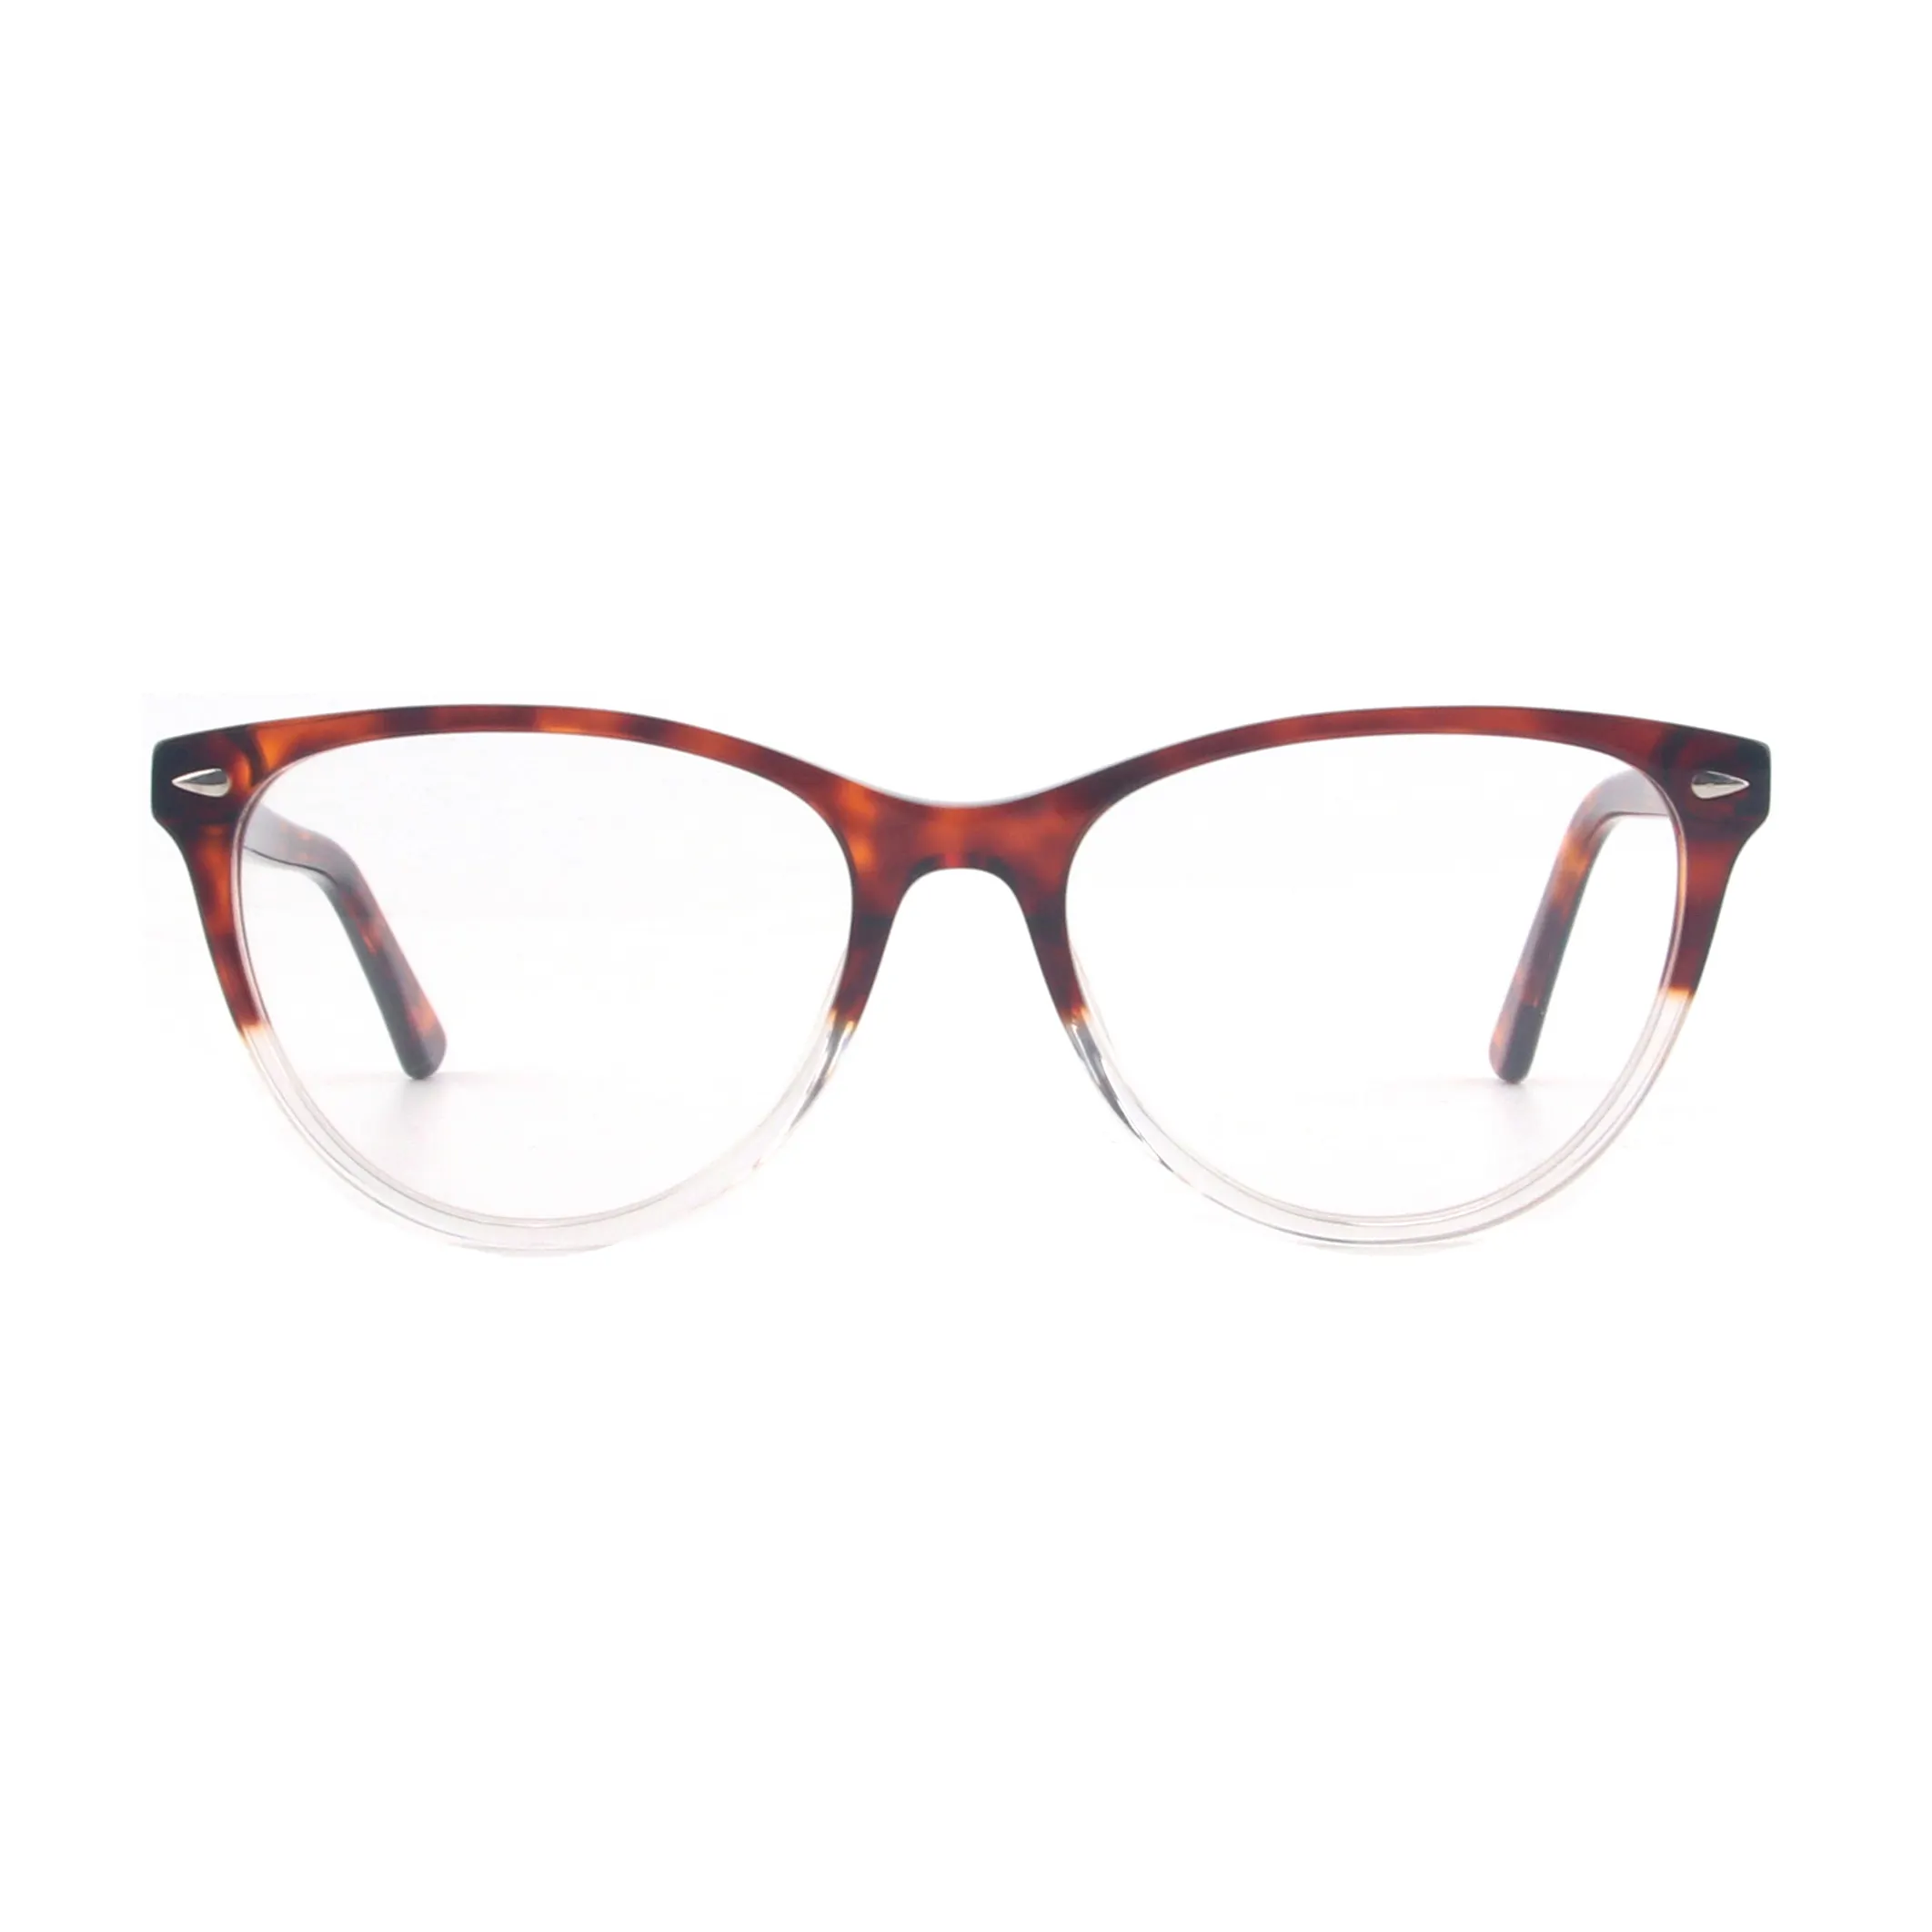 Wholesale Brand Popular Fashion Cheap Ready glasses optical frame acetate eyeglasses Classic Eyewear